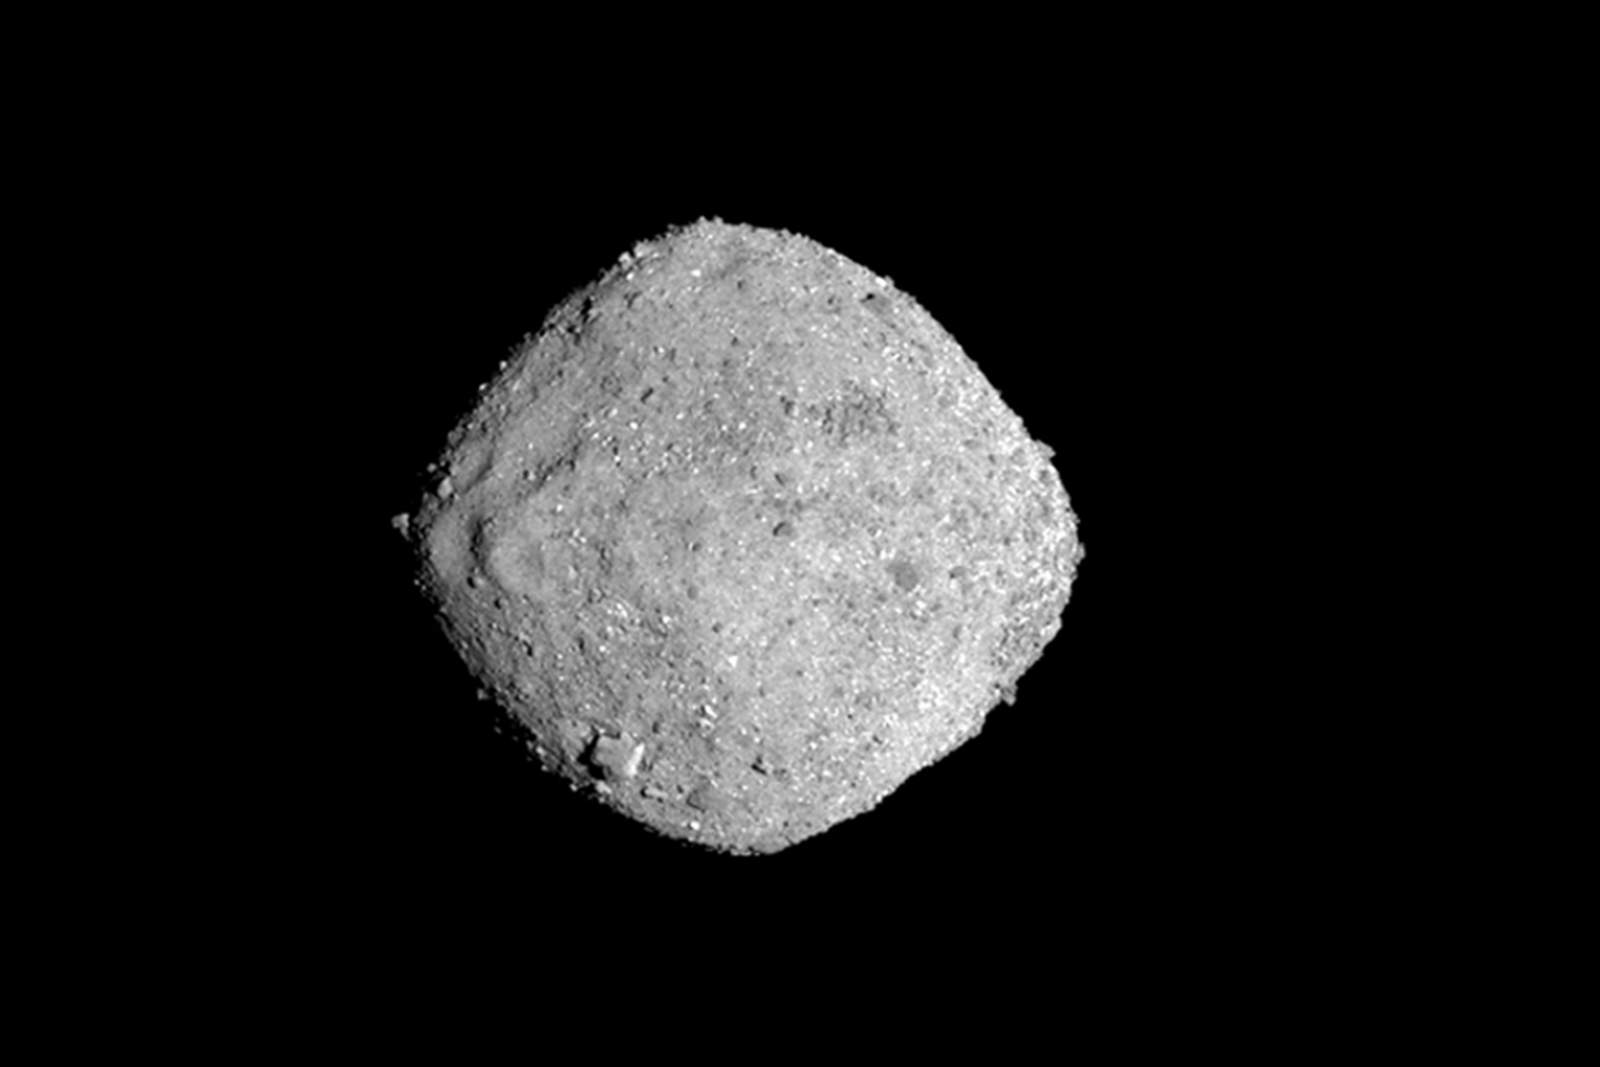 Descubren agua en el asteroide Bennu